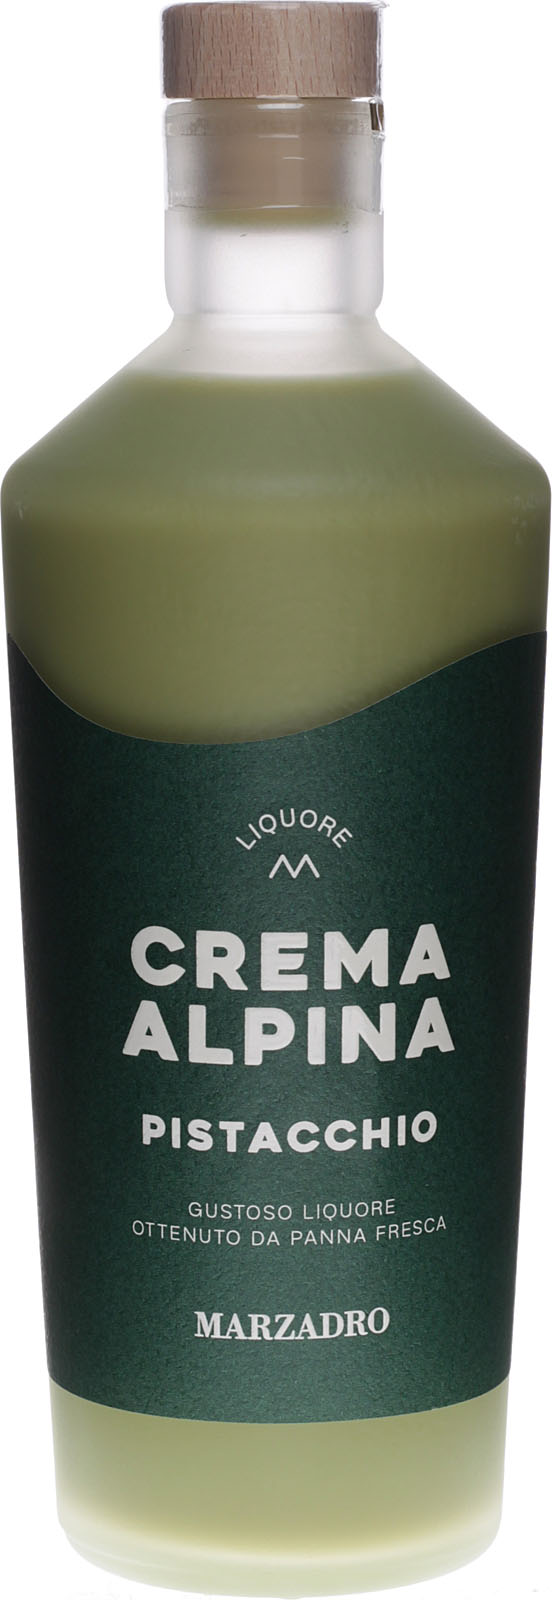 Marzadro Crema Alpina Pistacchio 0,7 Liter bei uns kauf